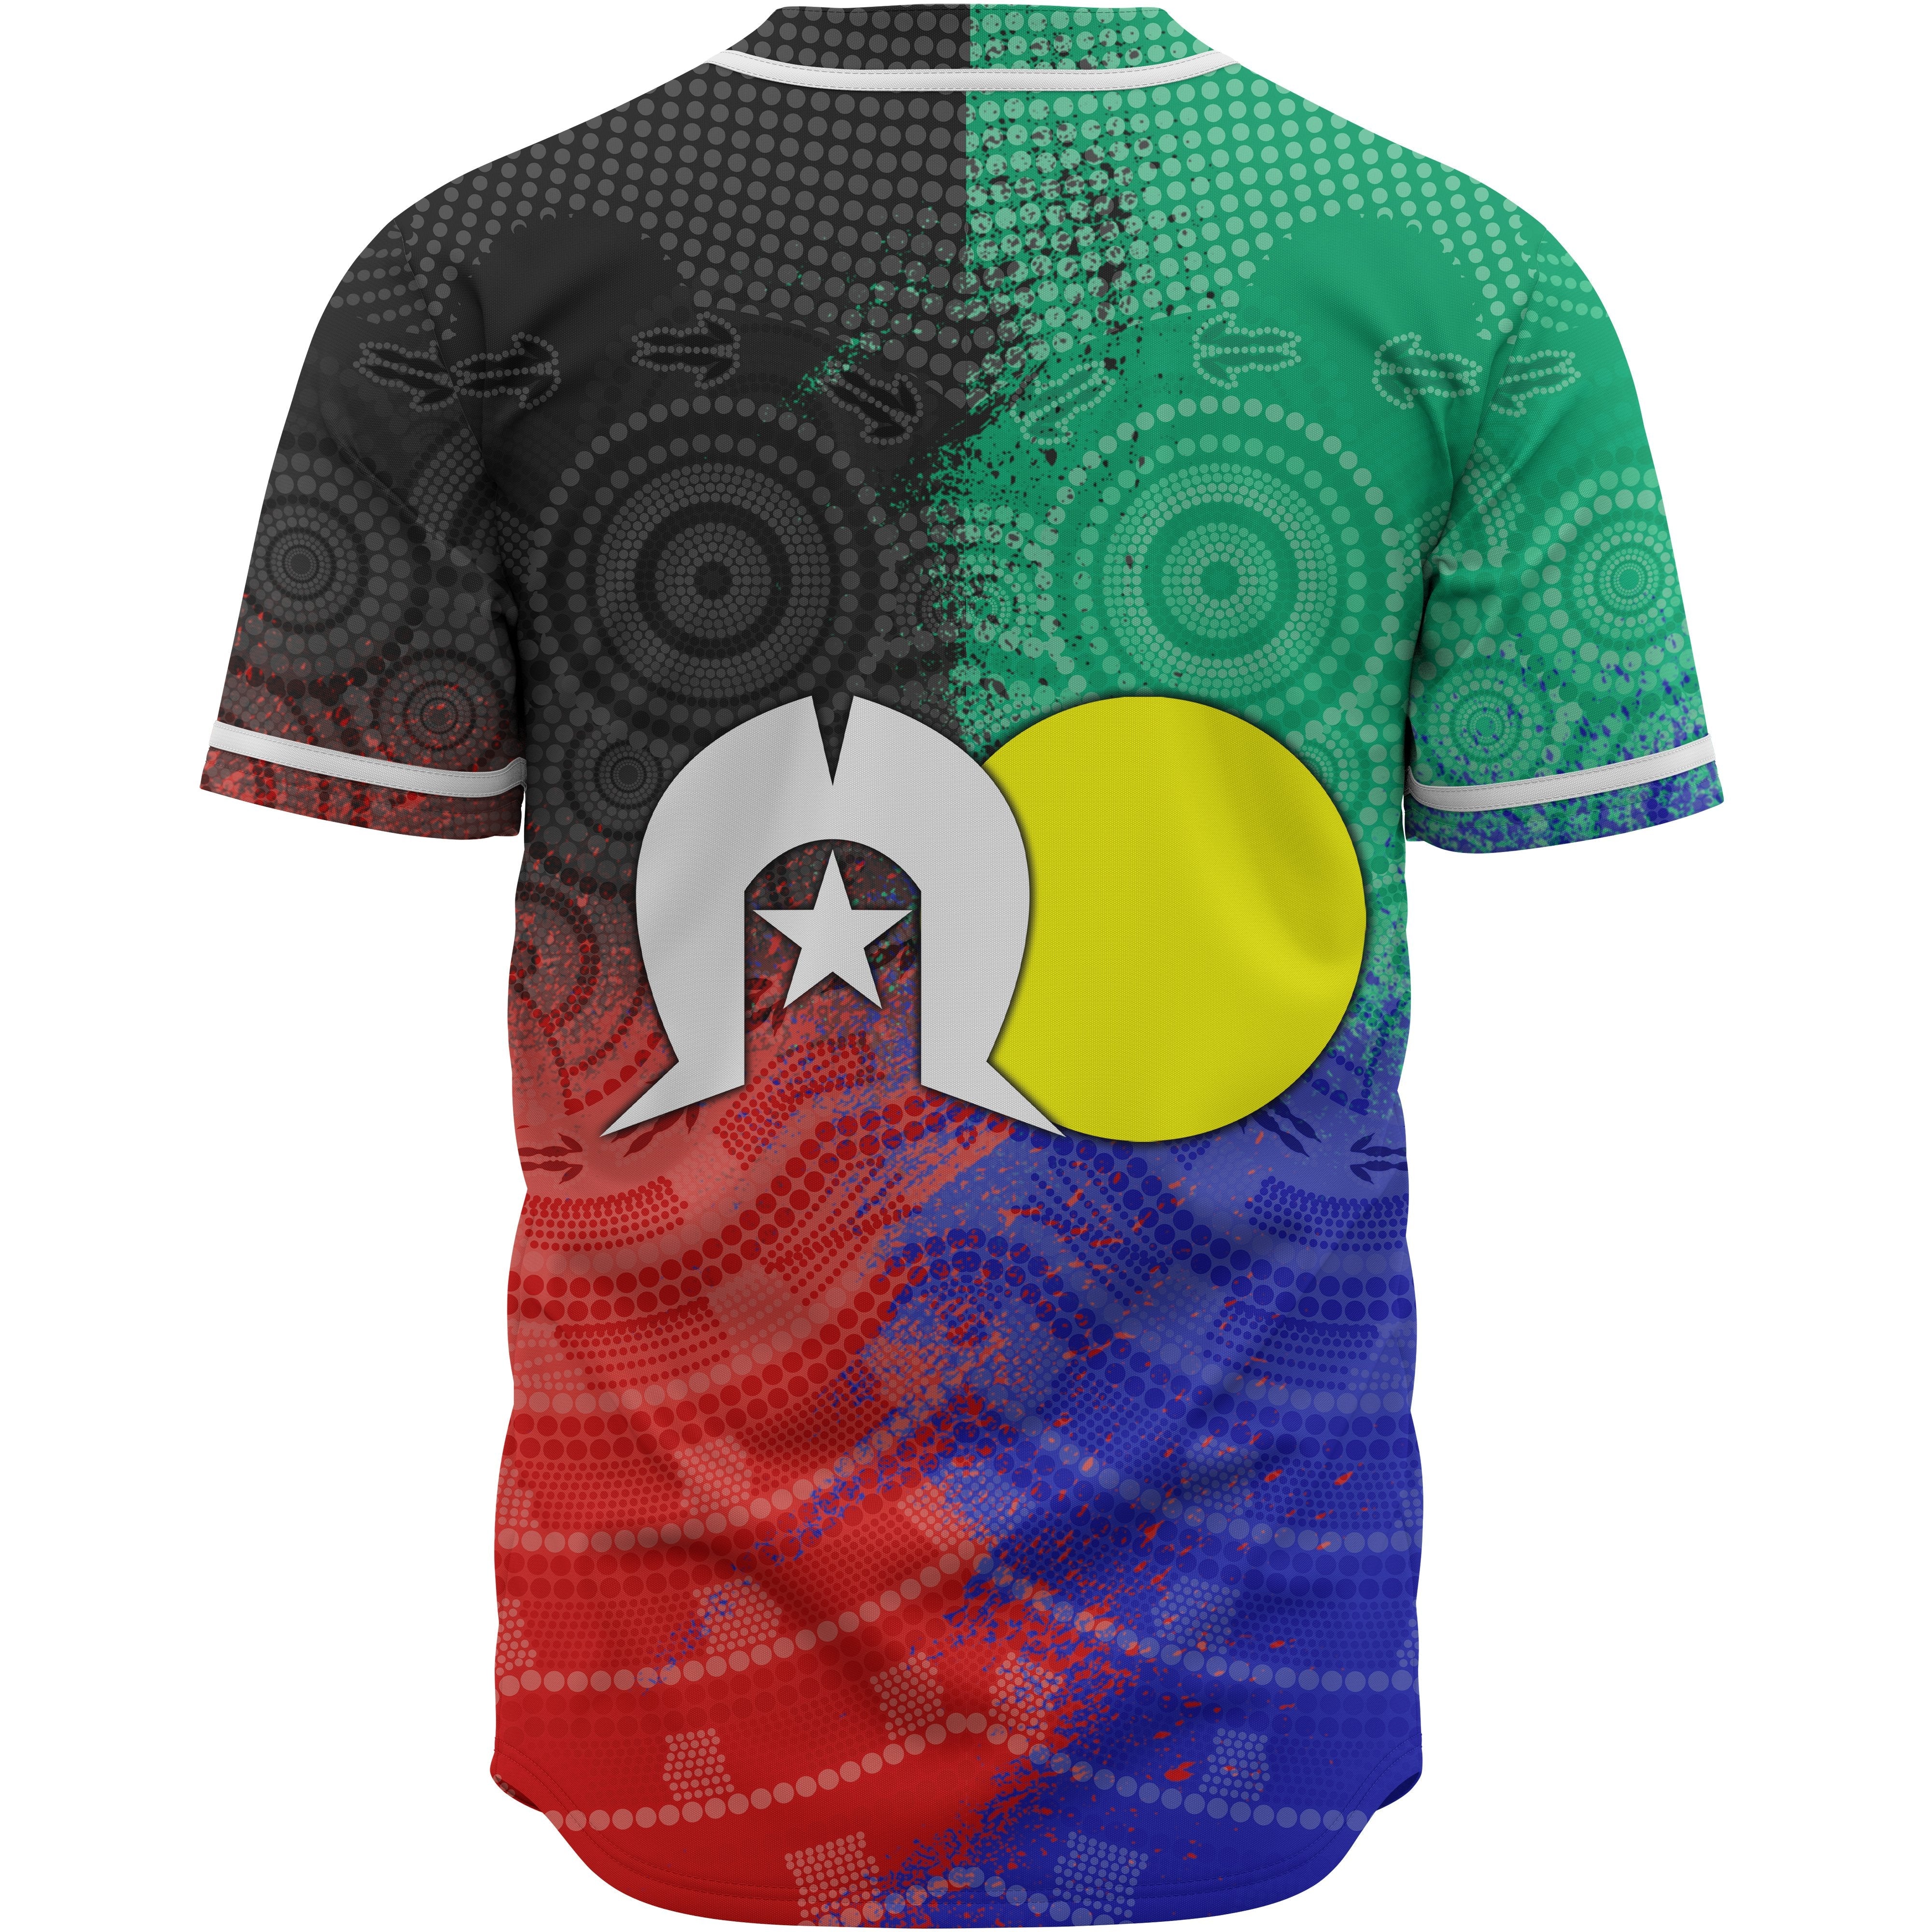 aboriginal-baseball-shirt-australia-naidoc-week-indigenous-flag-style